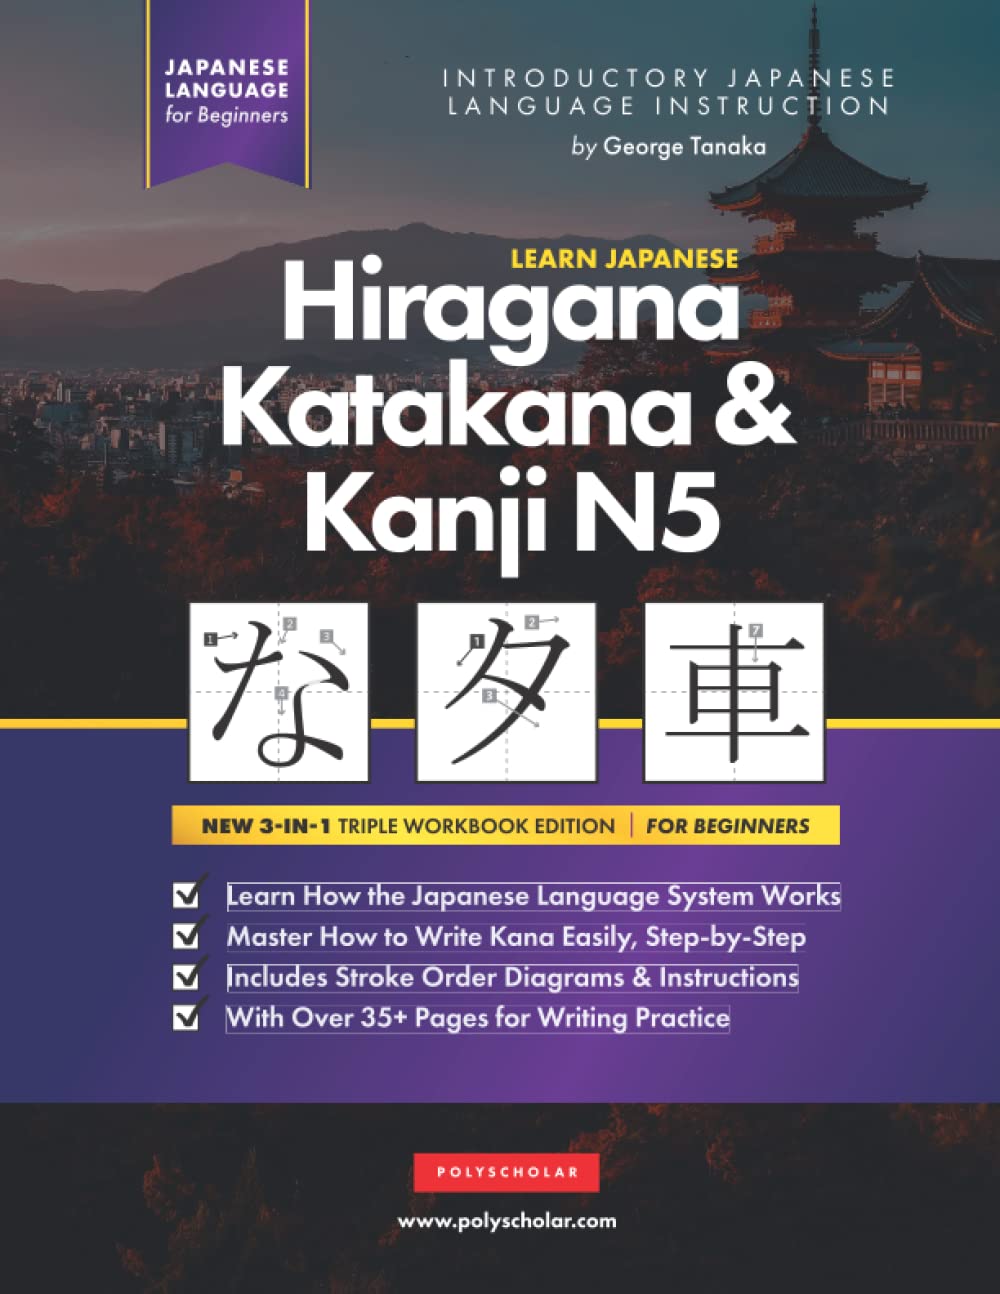 The Best Hiragana & Katakana Learning Resources